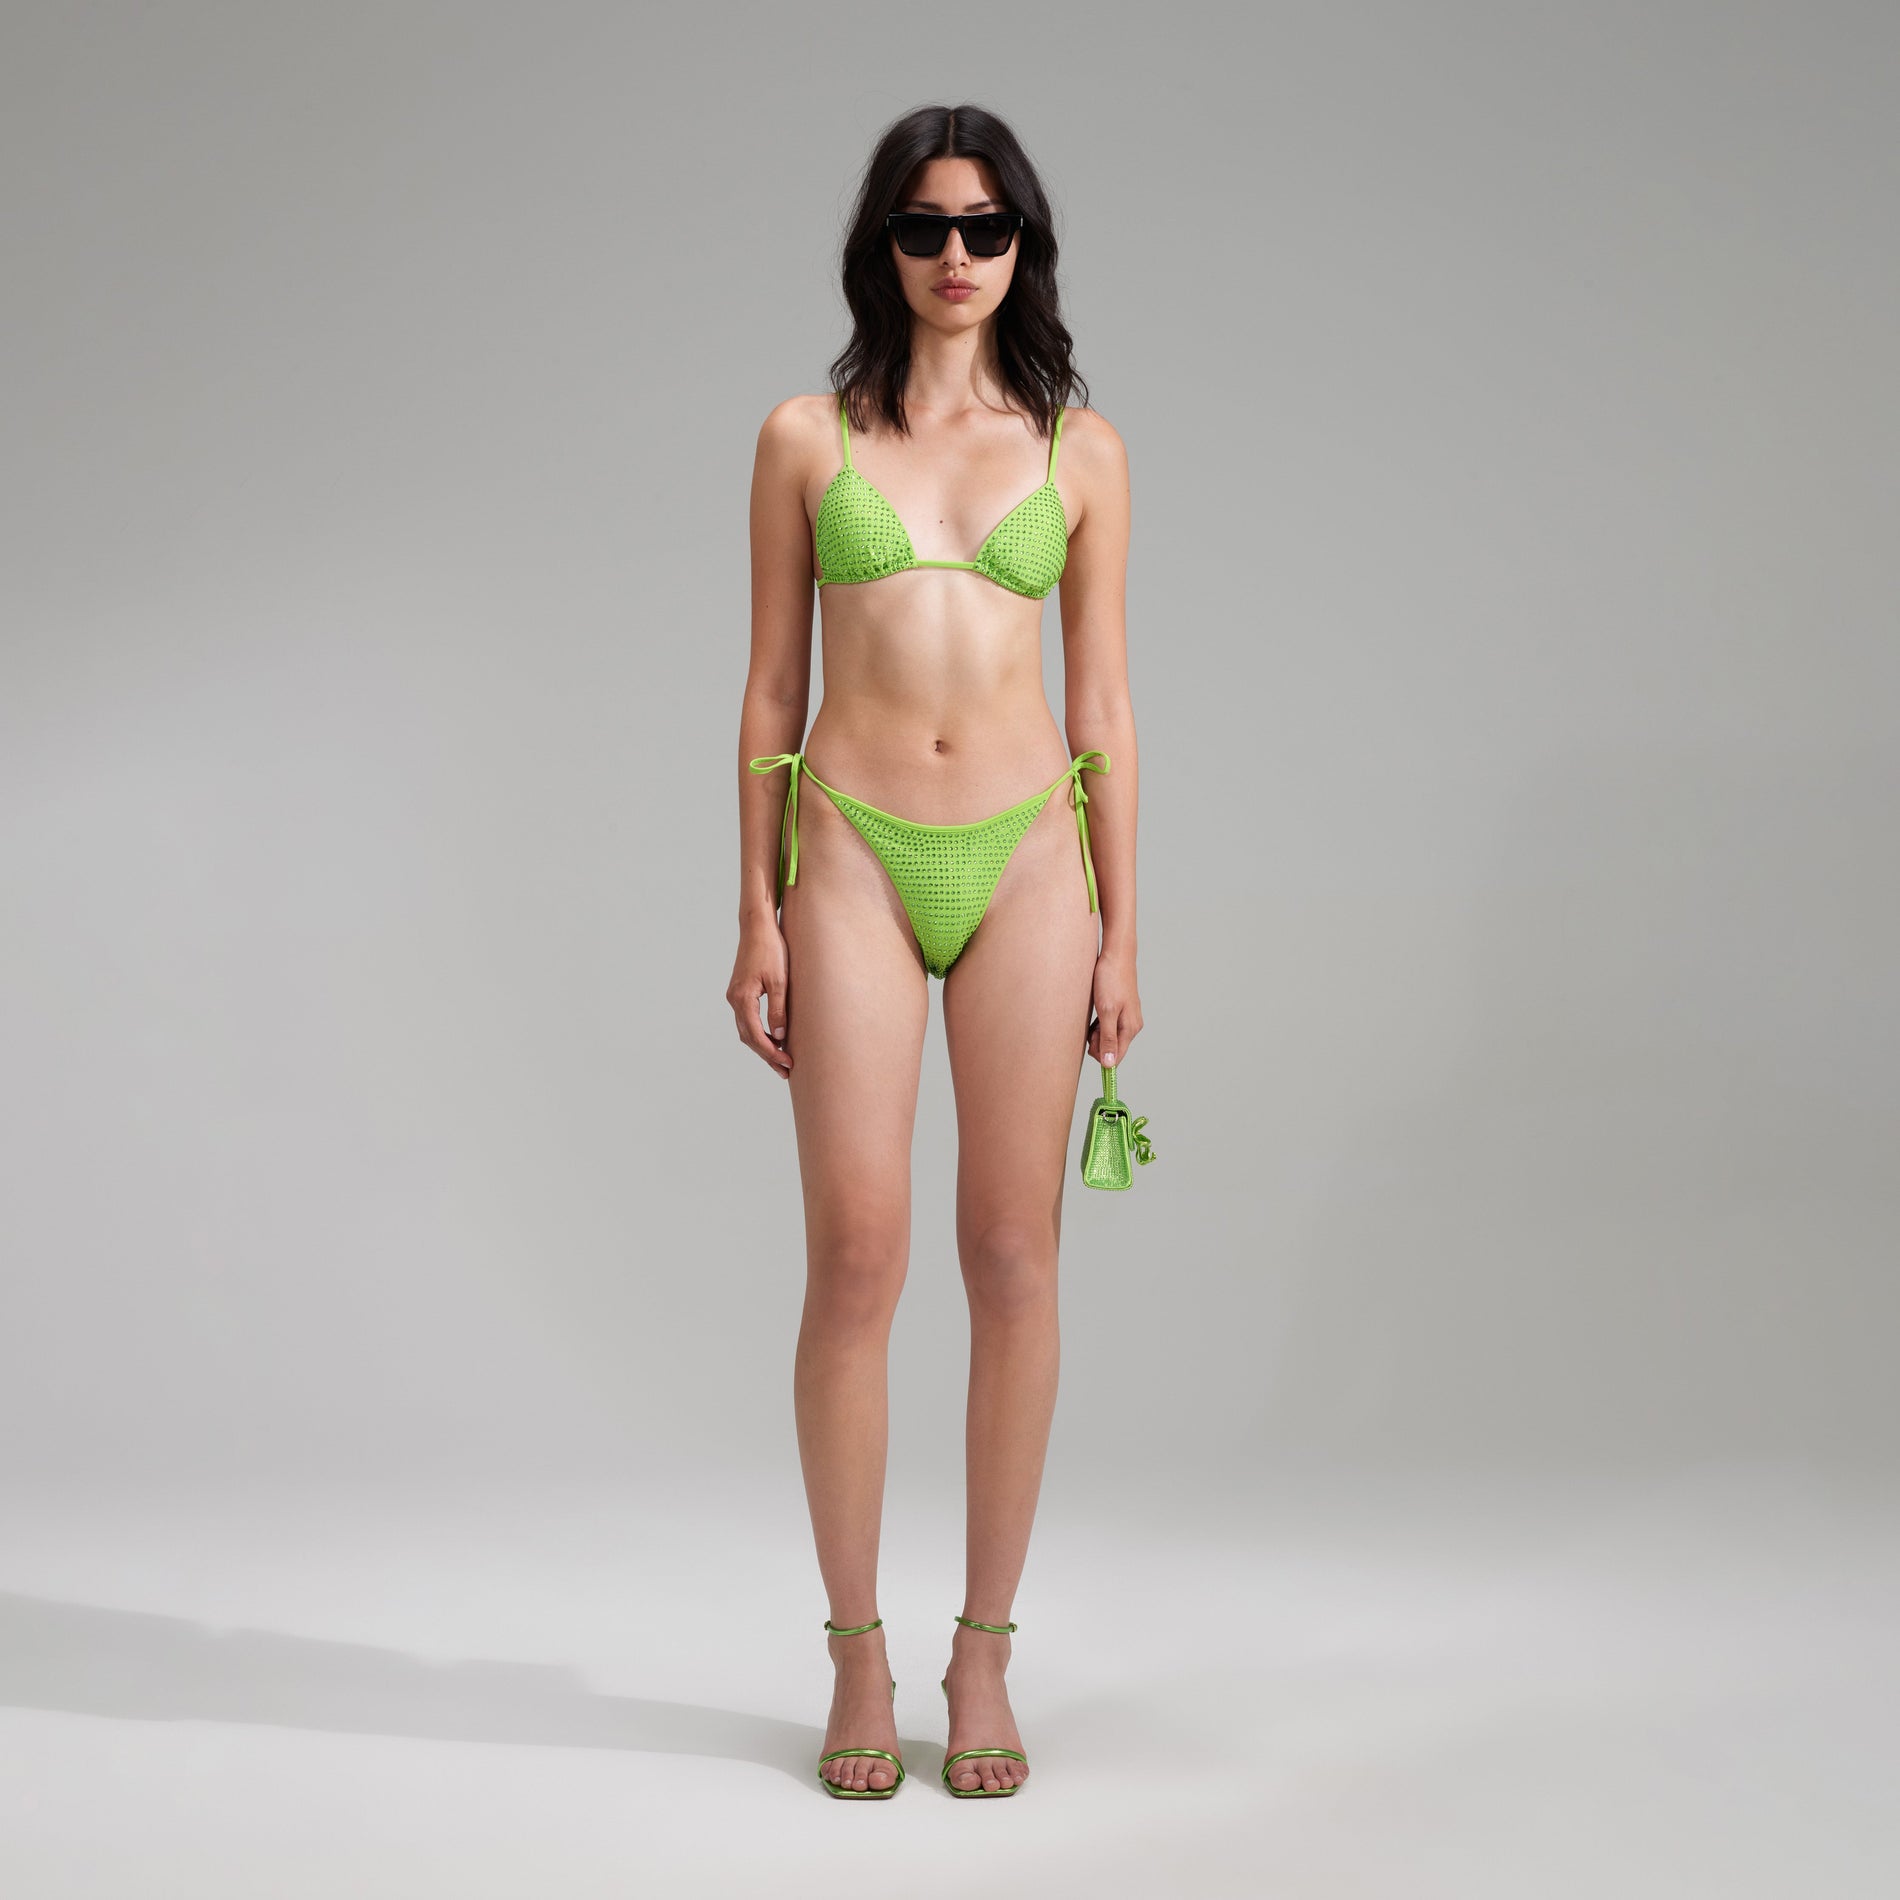 A woman wearing the Green Rhinestone Brazilian Bikini Briefs